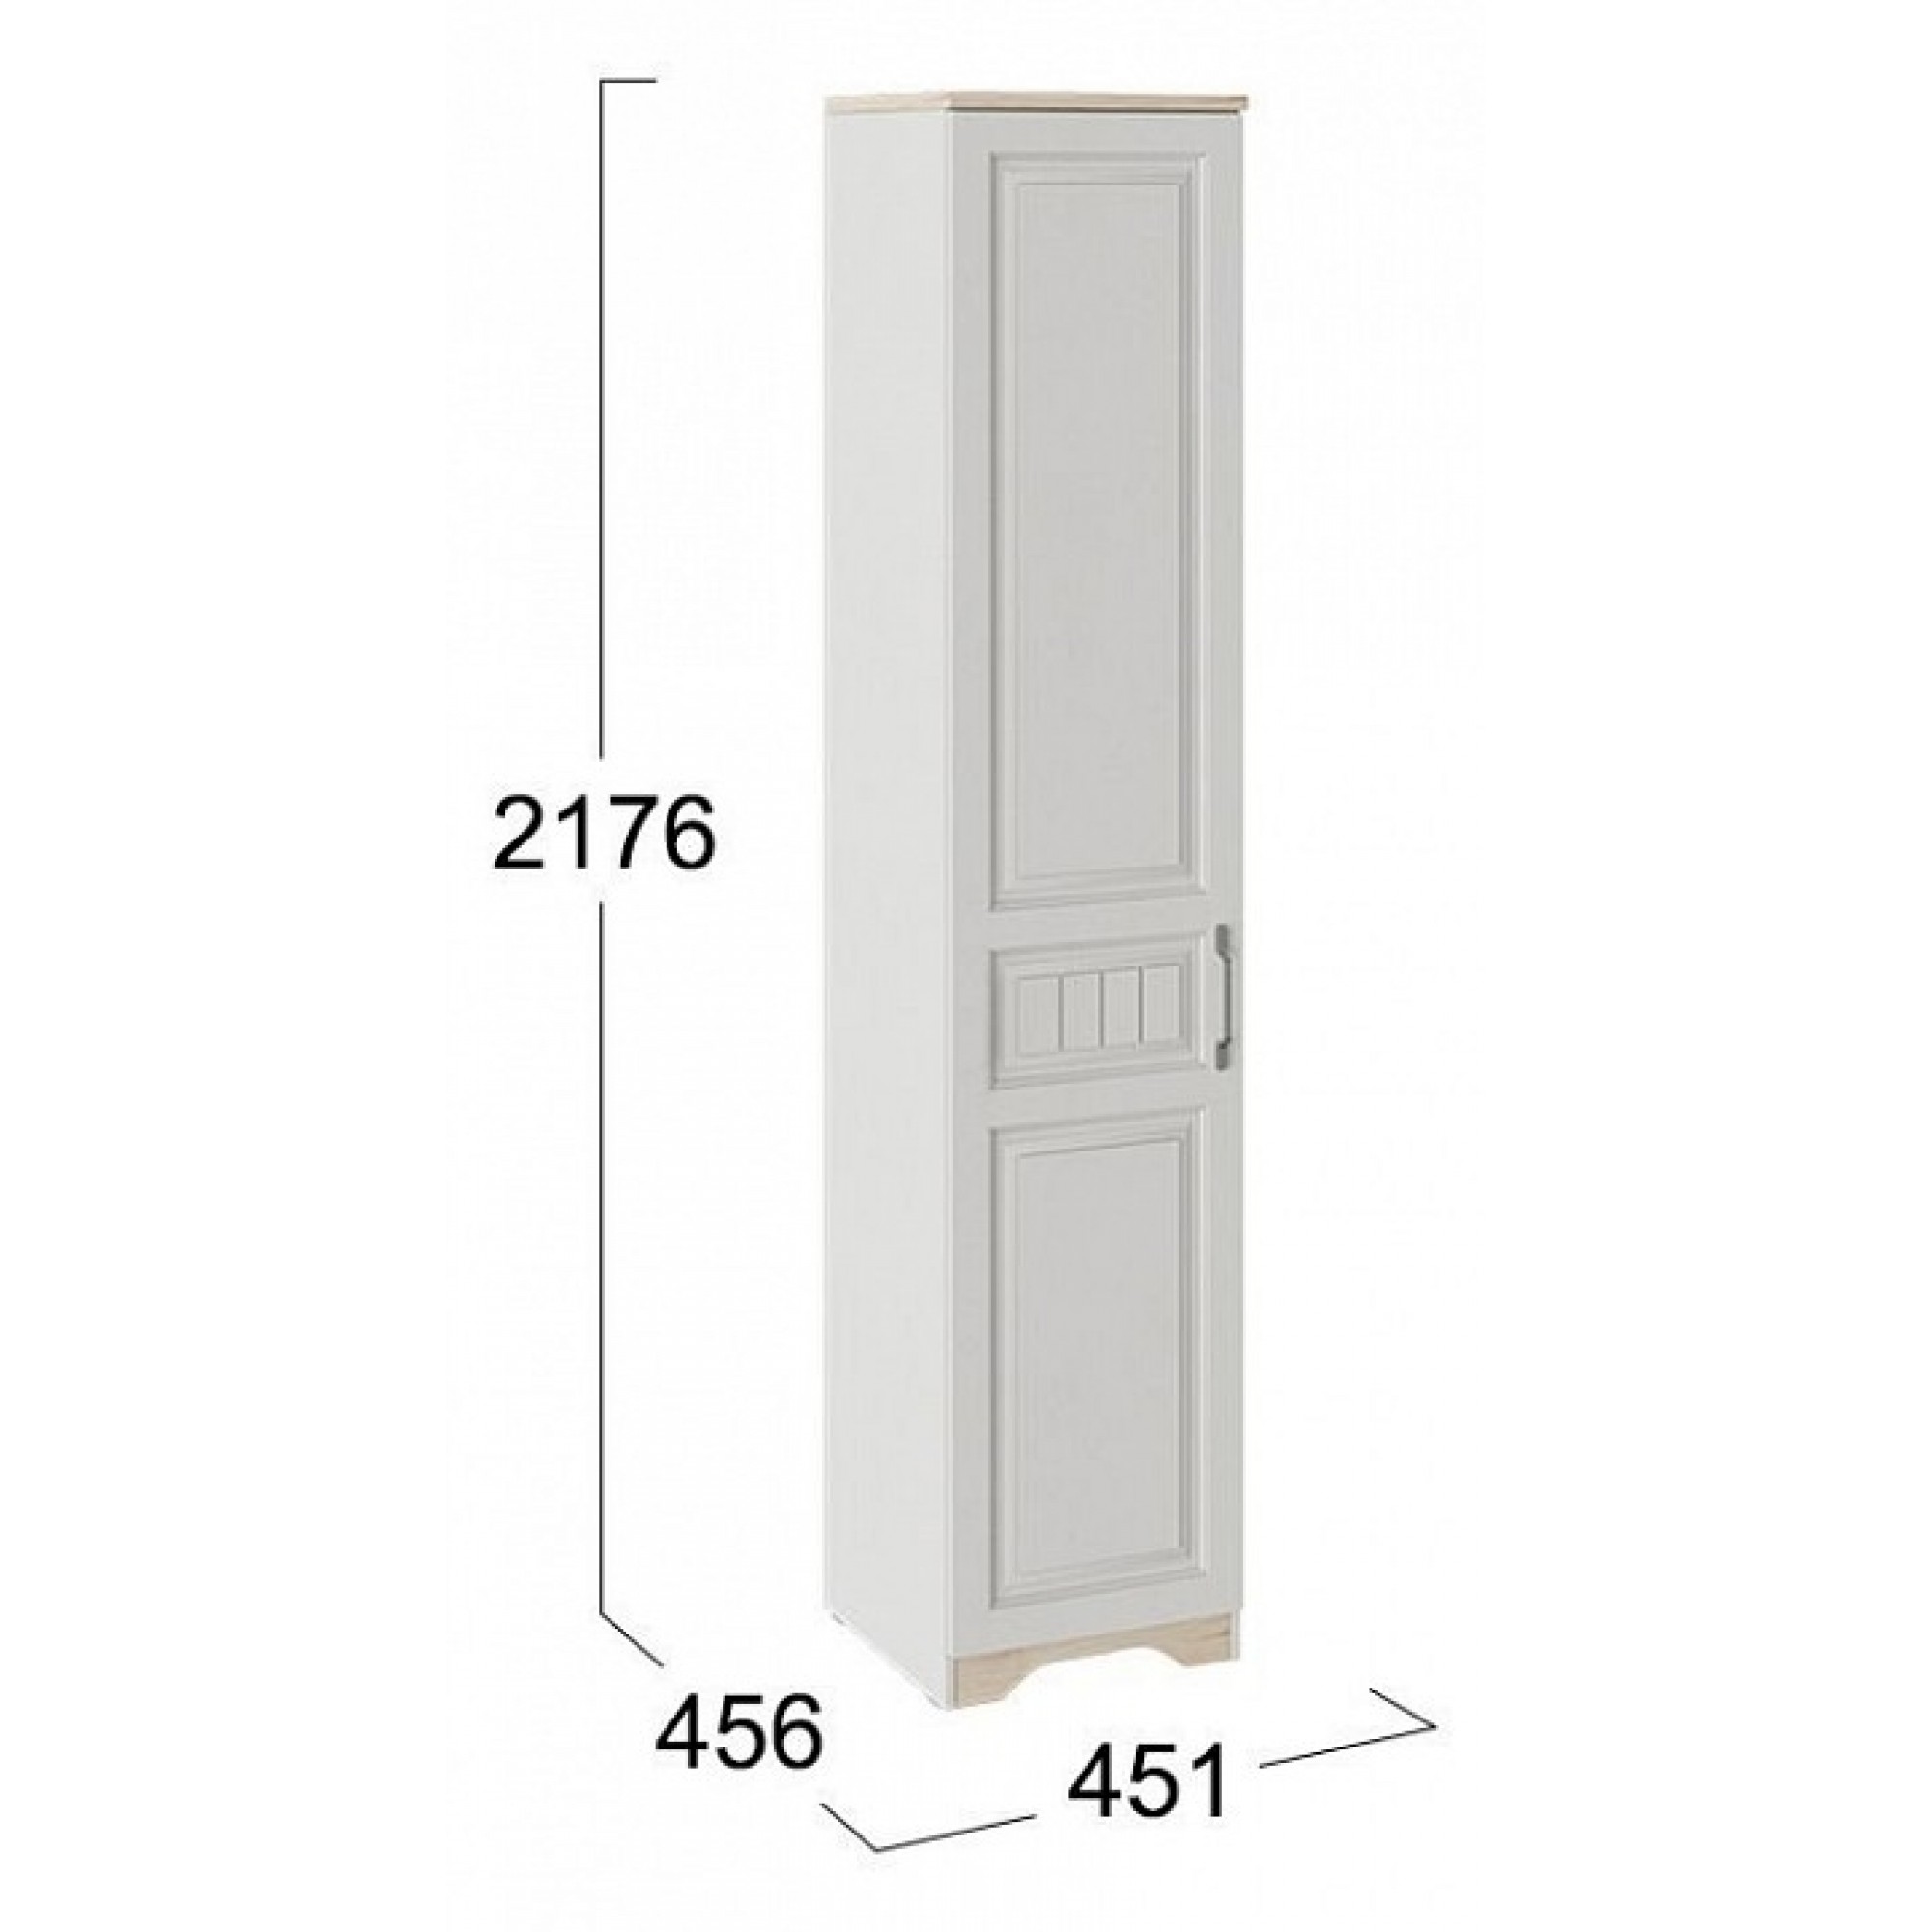 Шкаф для белья Тоскана СМ-353.21.001 L белый 451x456x2176(TRI_194919)